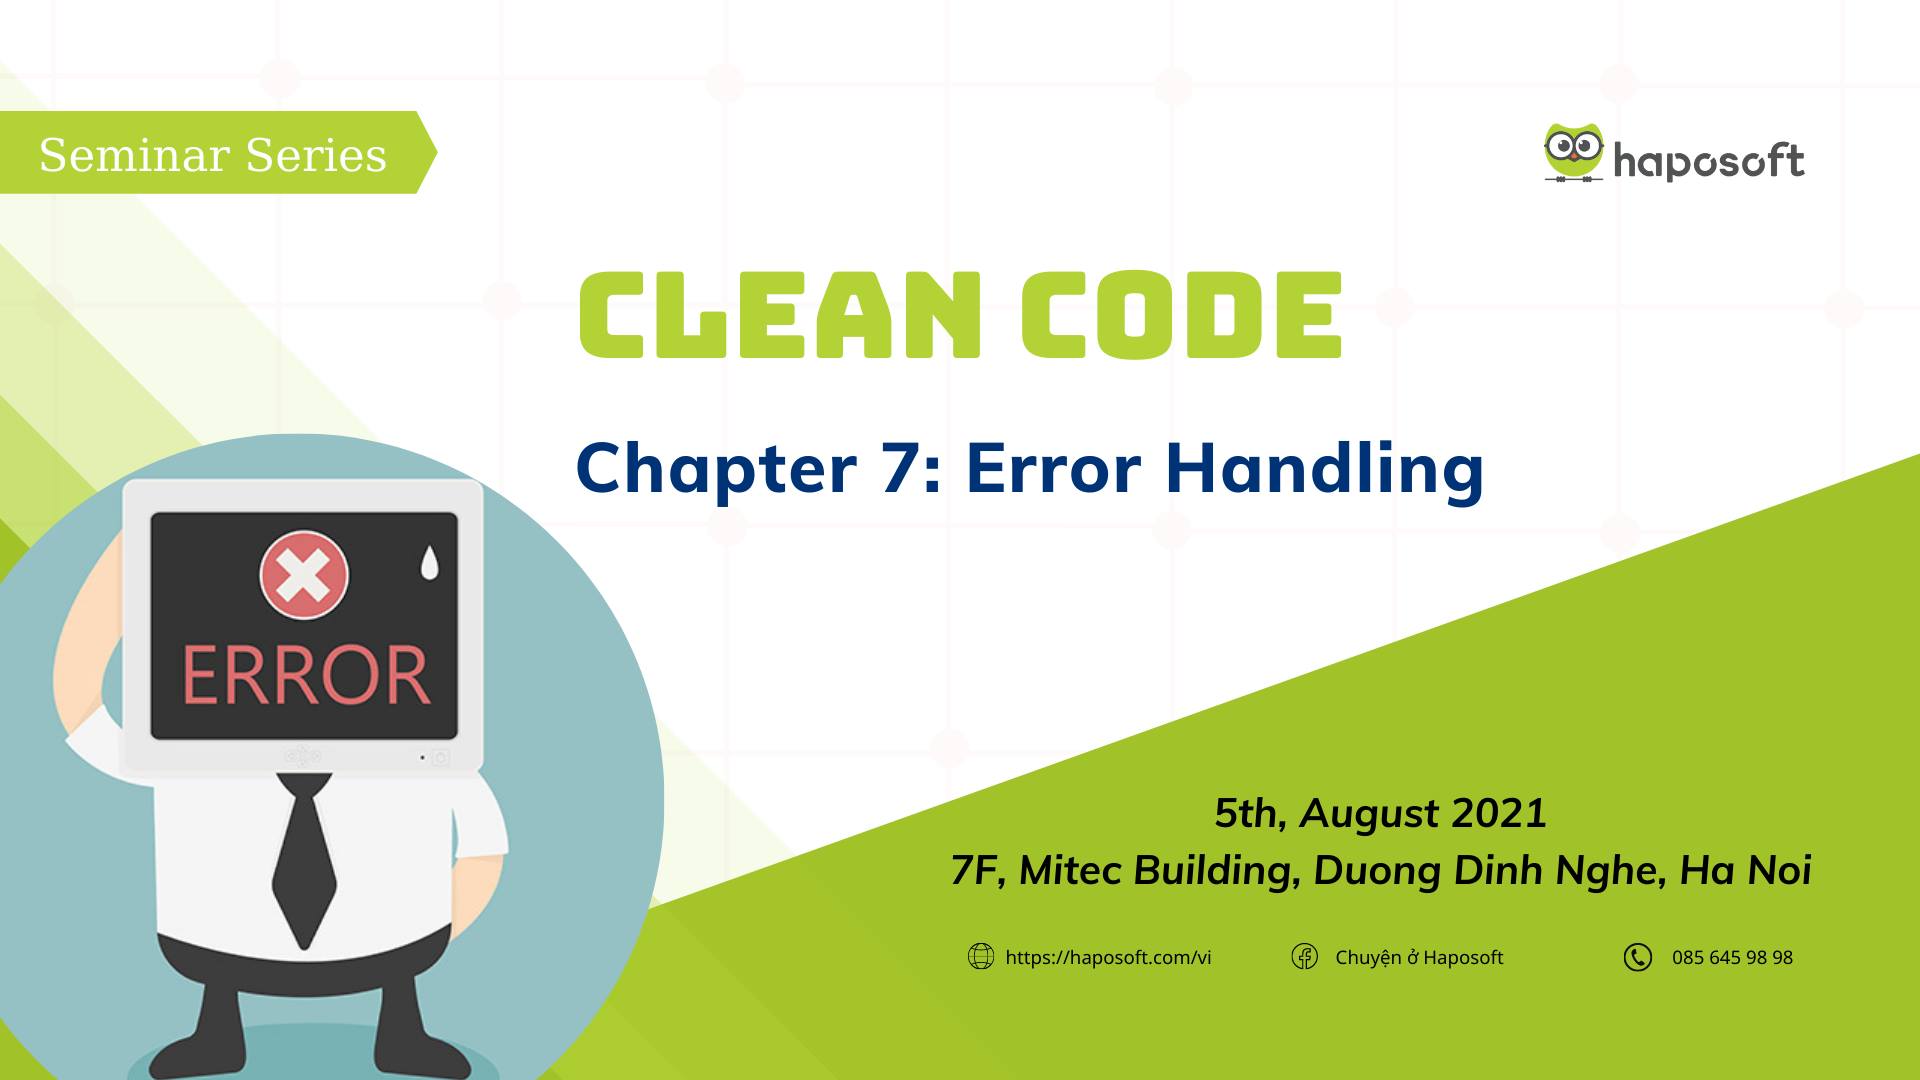 Clean code series: Part 7 - Error Handling